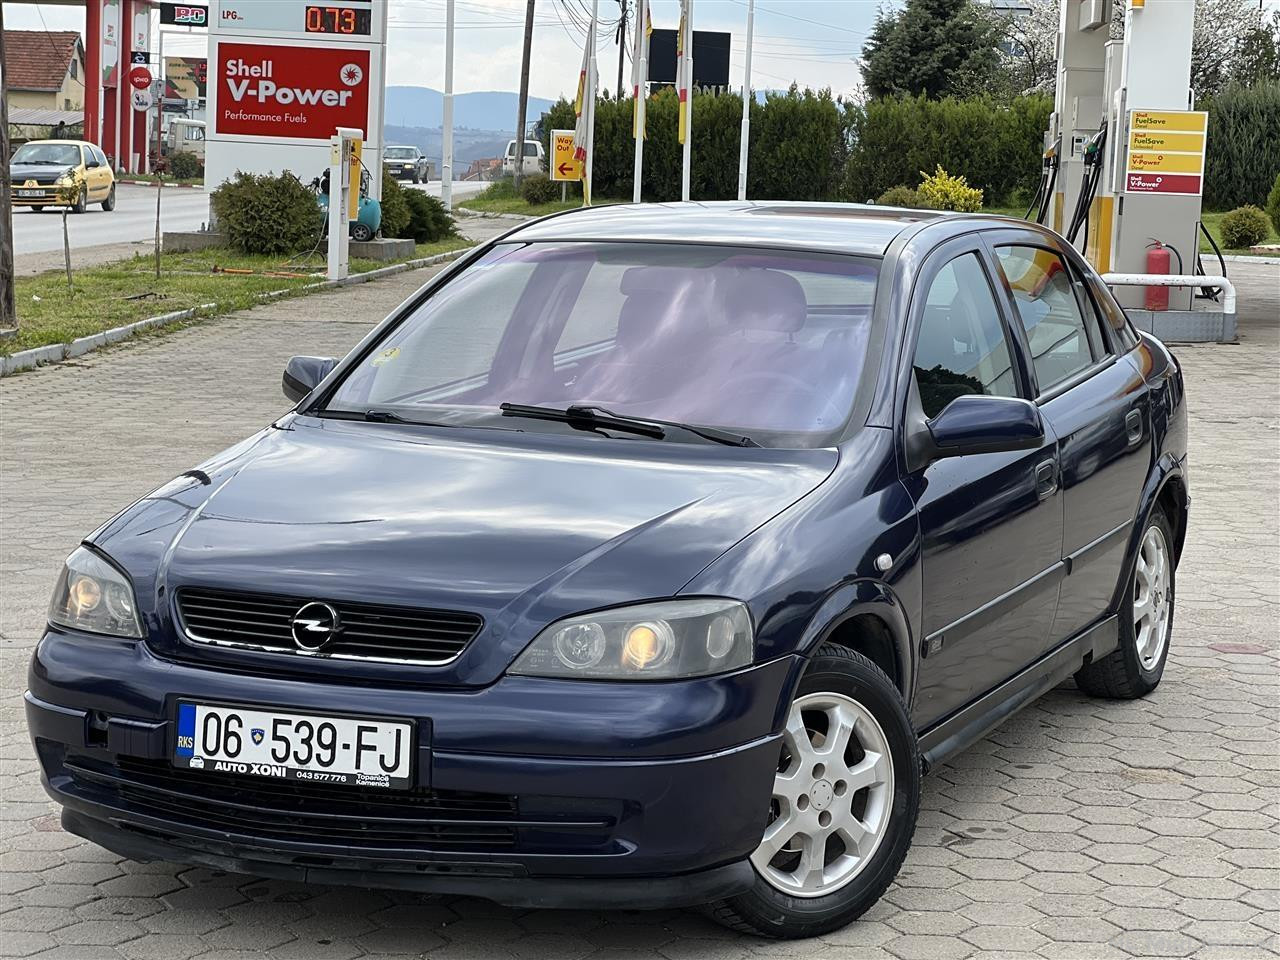 Opel Astra G 1.7 DTI Matorr Japan V.p2001 Rks 9 Muj 